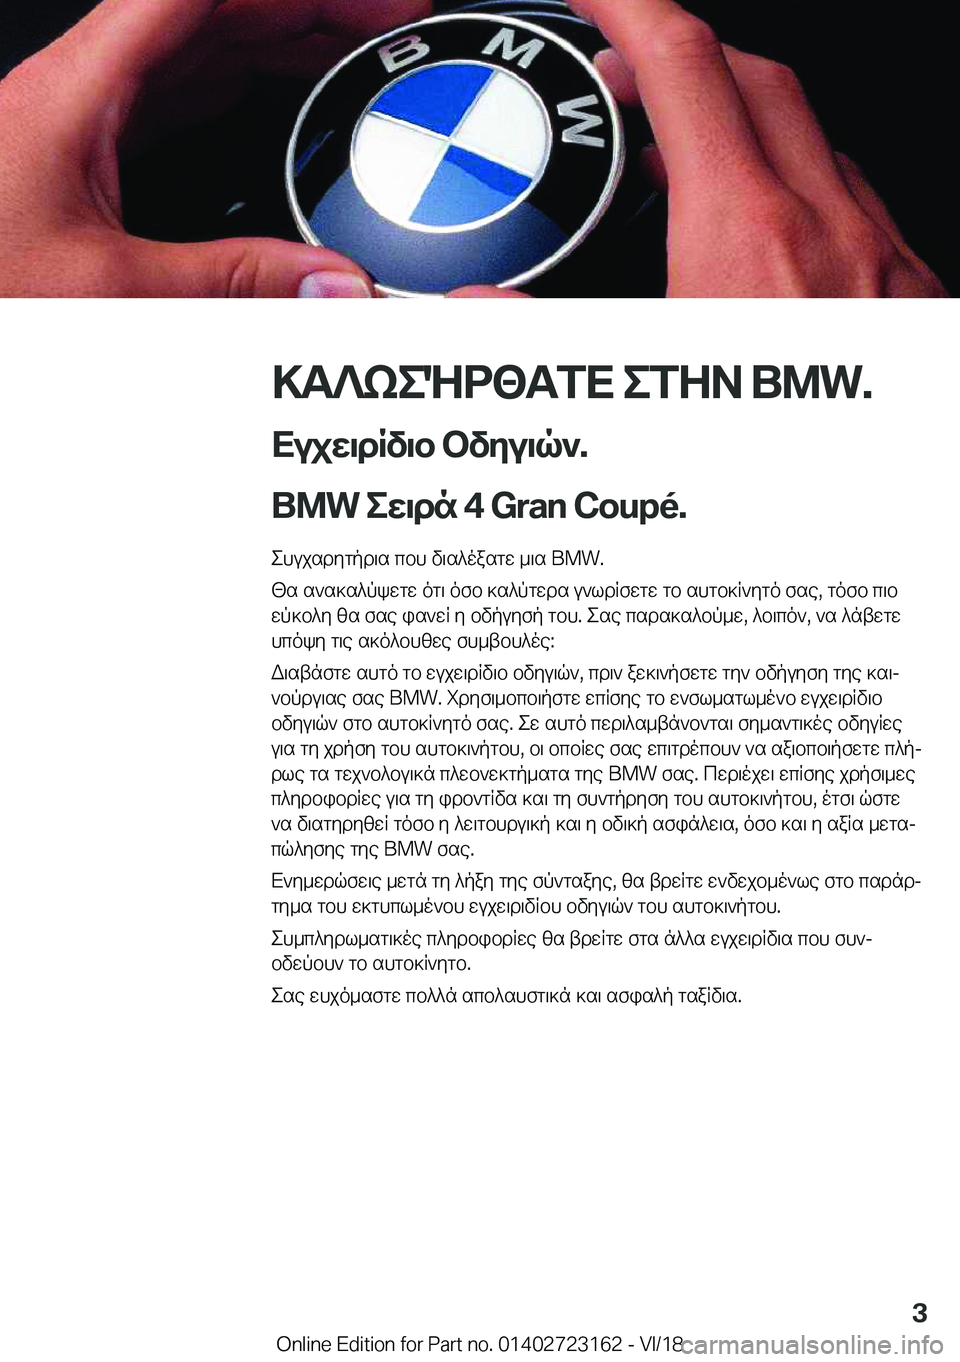 BMW 4 SERIES COUPE 2019  ΟΔΗΓΌΣ ΧΡΉΣΗΣ (in Greek) >T?keNd<TfX�efZA��B�M�W�.
Xujw\dRv\b�bvyu\q`�.
�B�M�W�ew\dn��4��G�r�a�n��C�o�u�p�